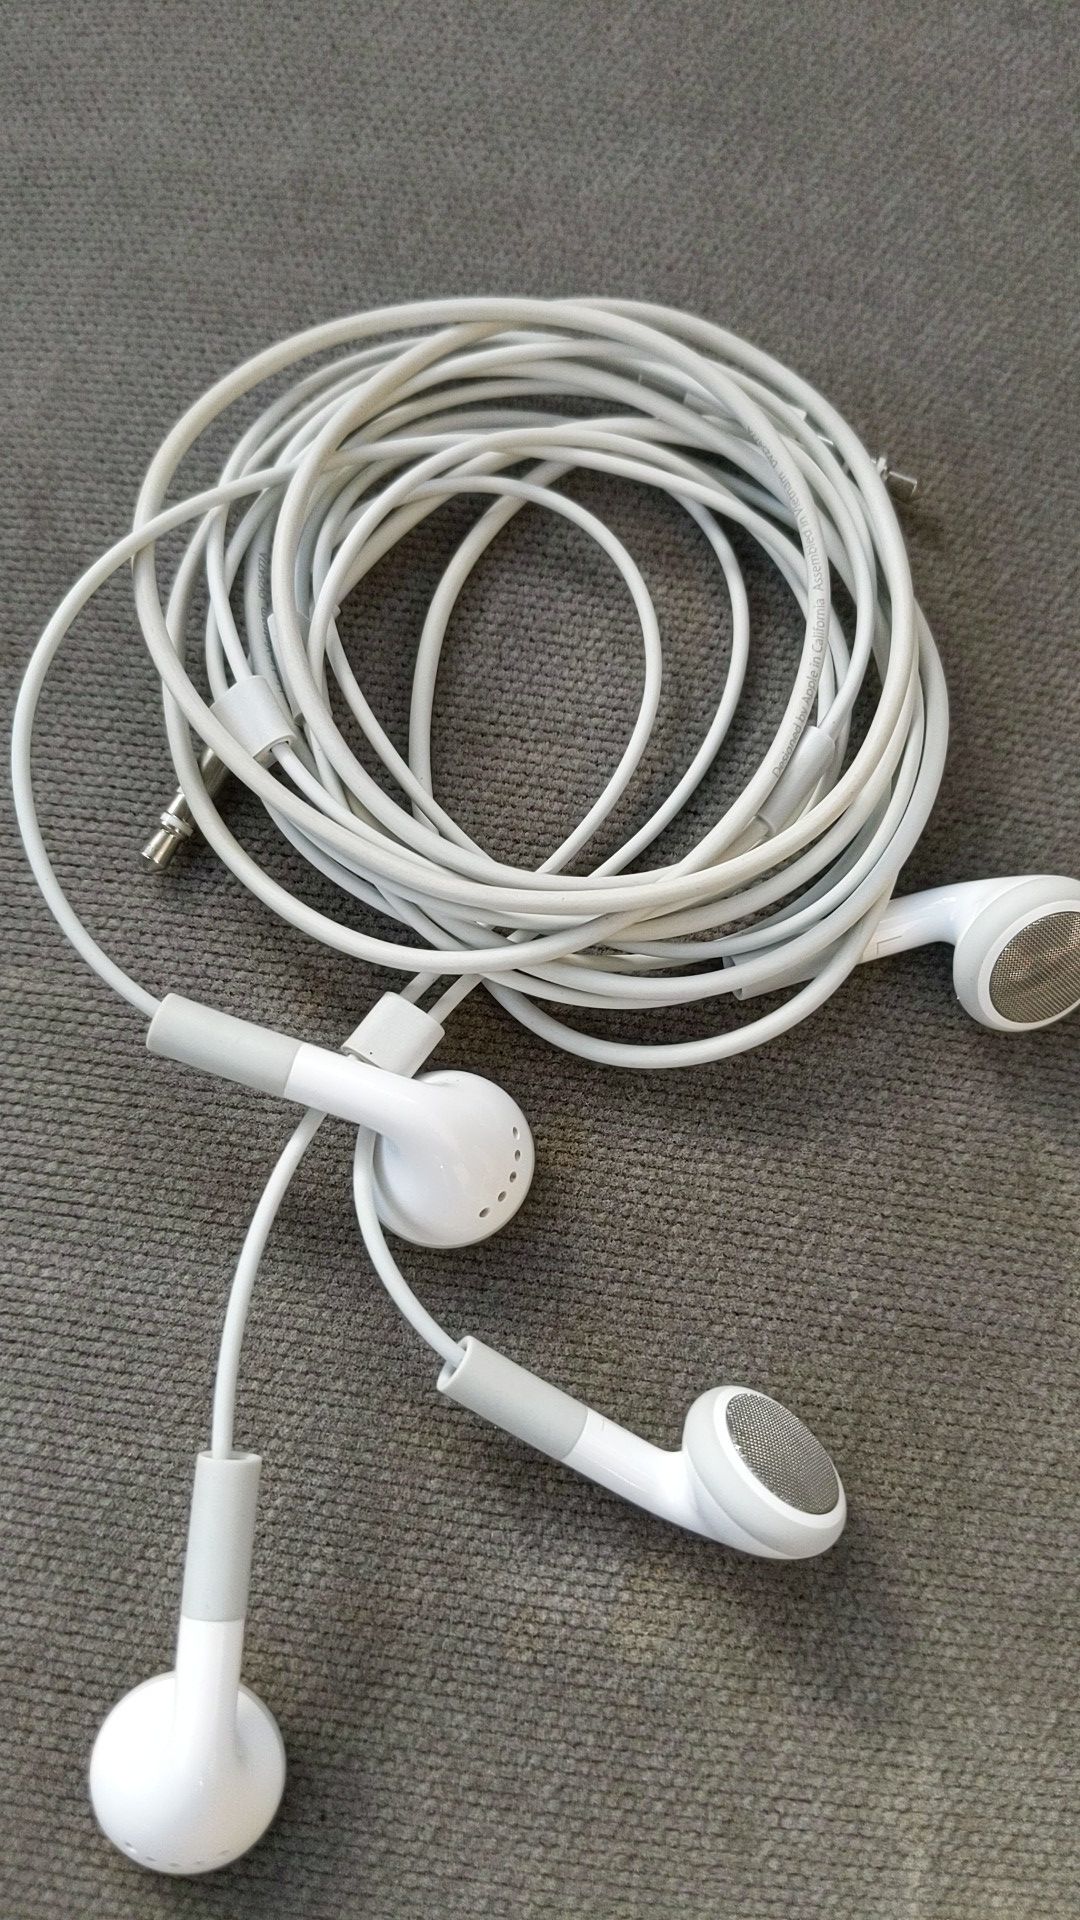 Apple Headphones Earbuds